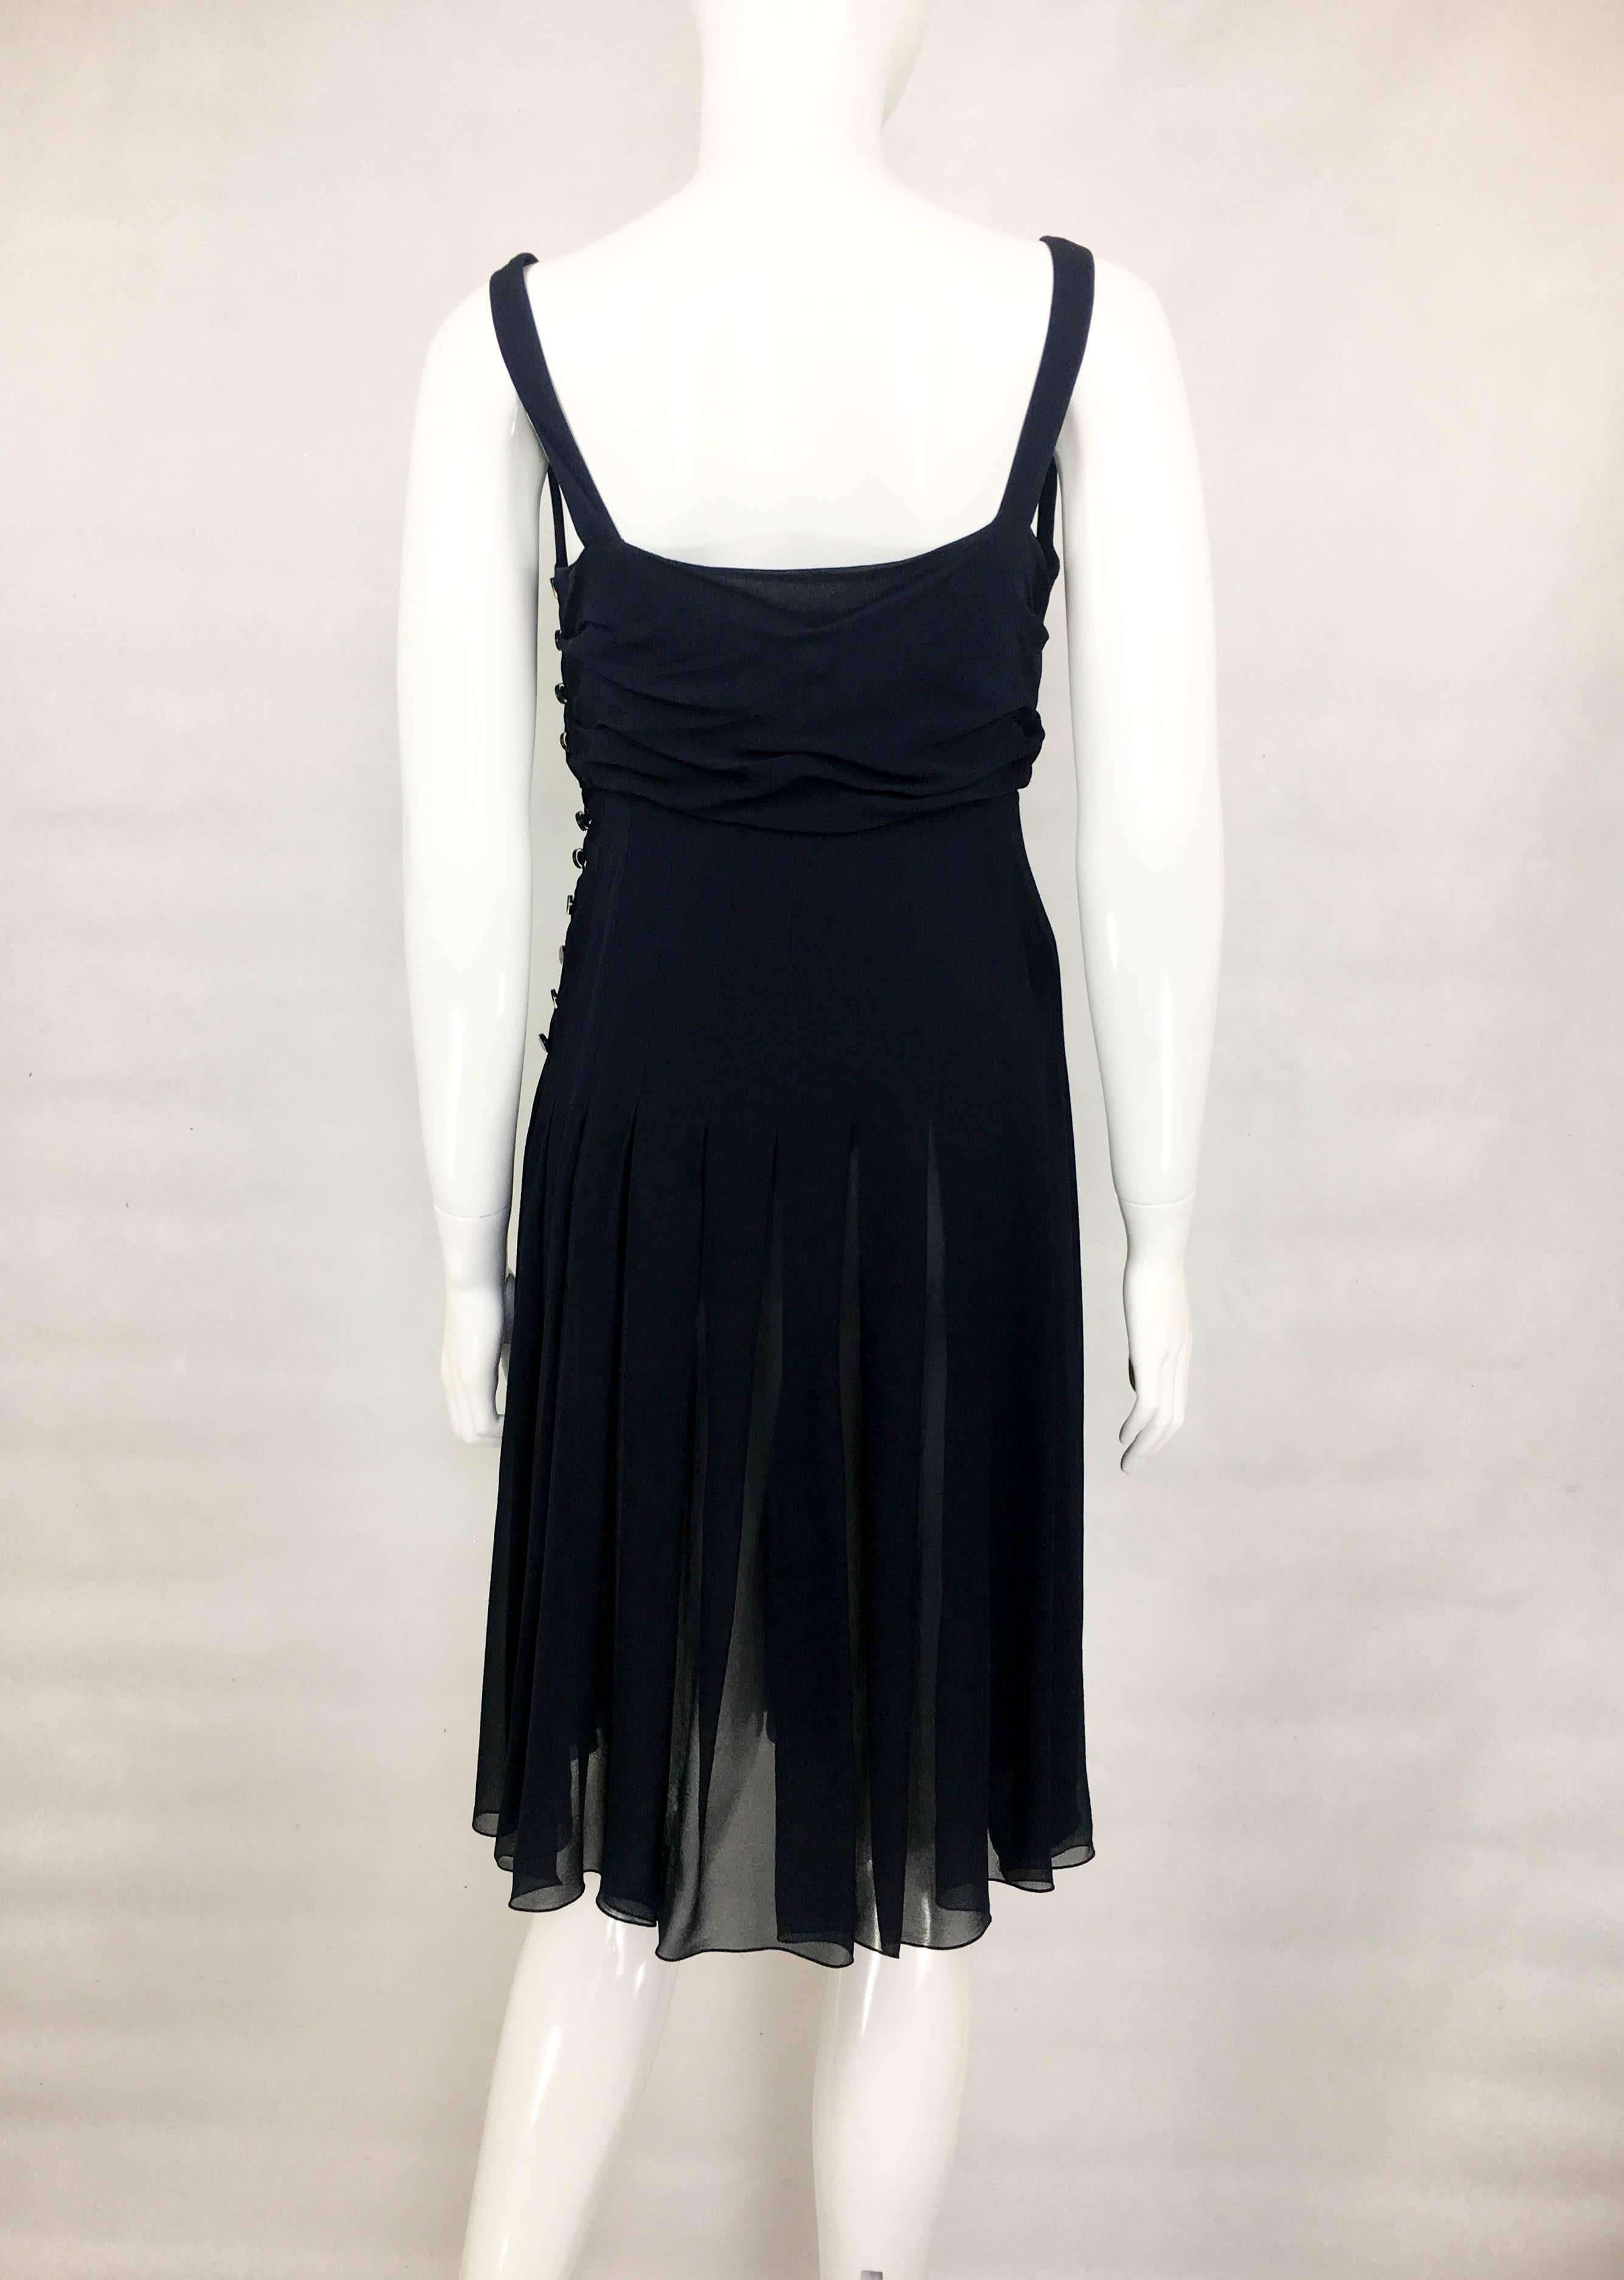 Chanel Midnight Blue Silk Chiffon Draped and Pleated Dress, Circa 2000 For Sale 4